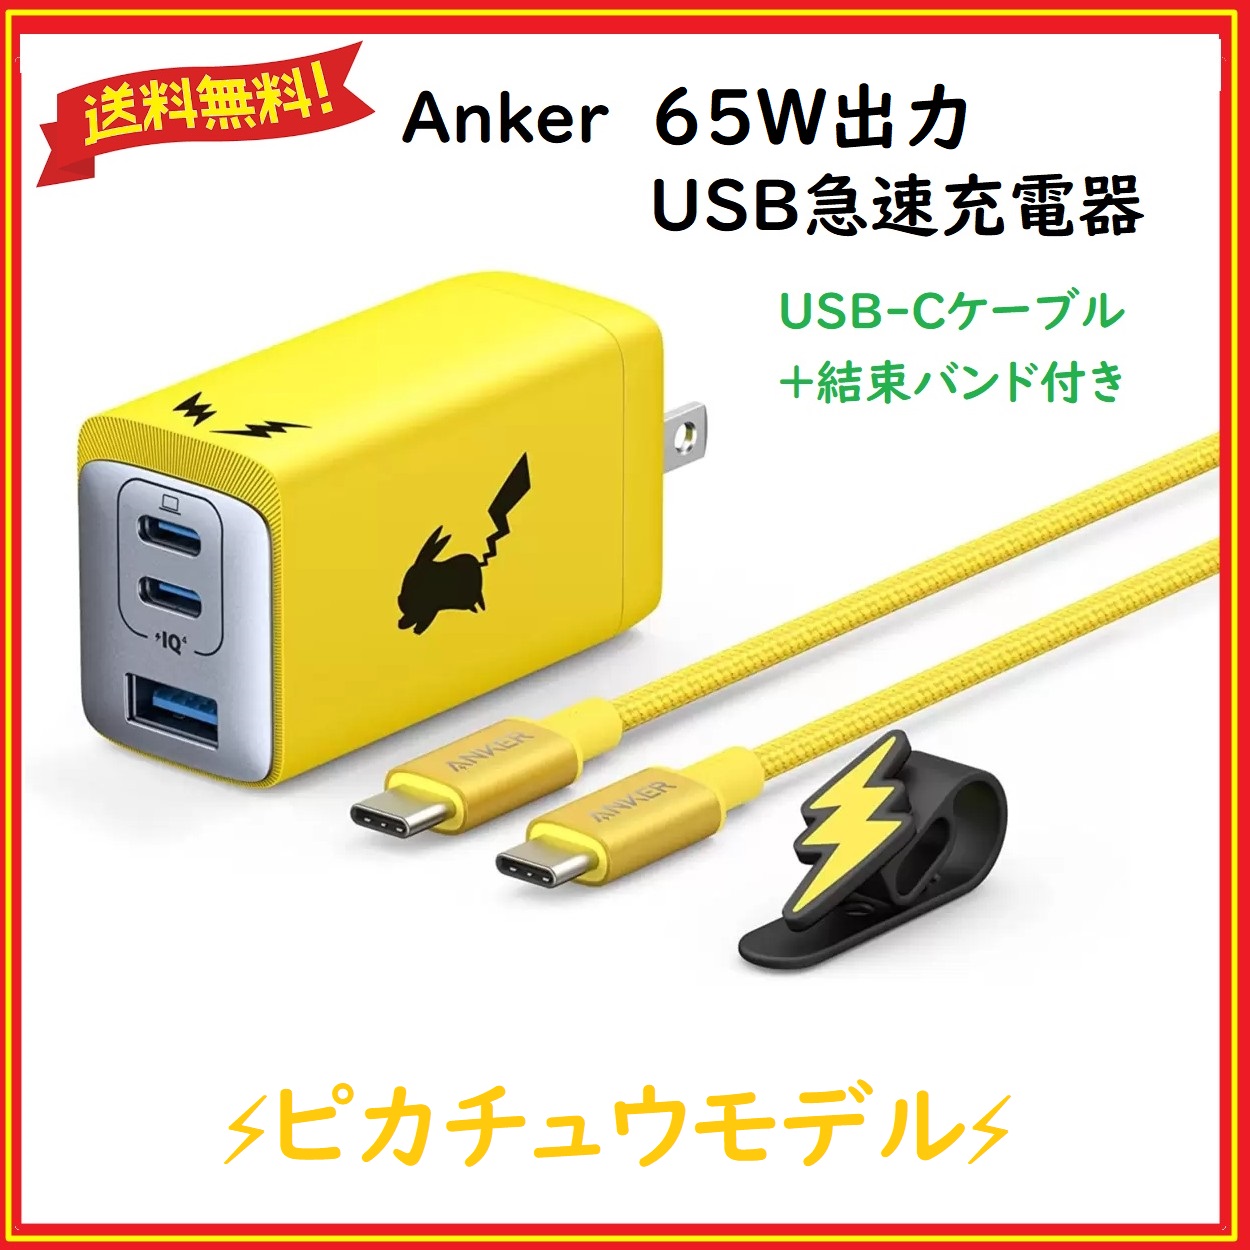 Anker(アンカー) USB急速充電器 ピカチュウモデル 65W高出力 スマホ ３台高速充電 イエロー色(ケーブル＋バンド付)【送料無料】